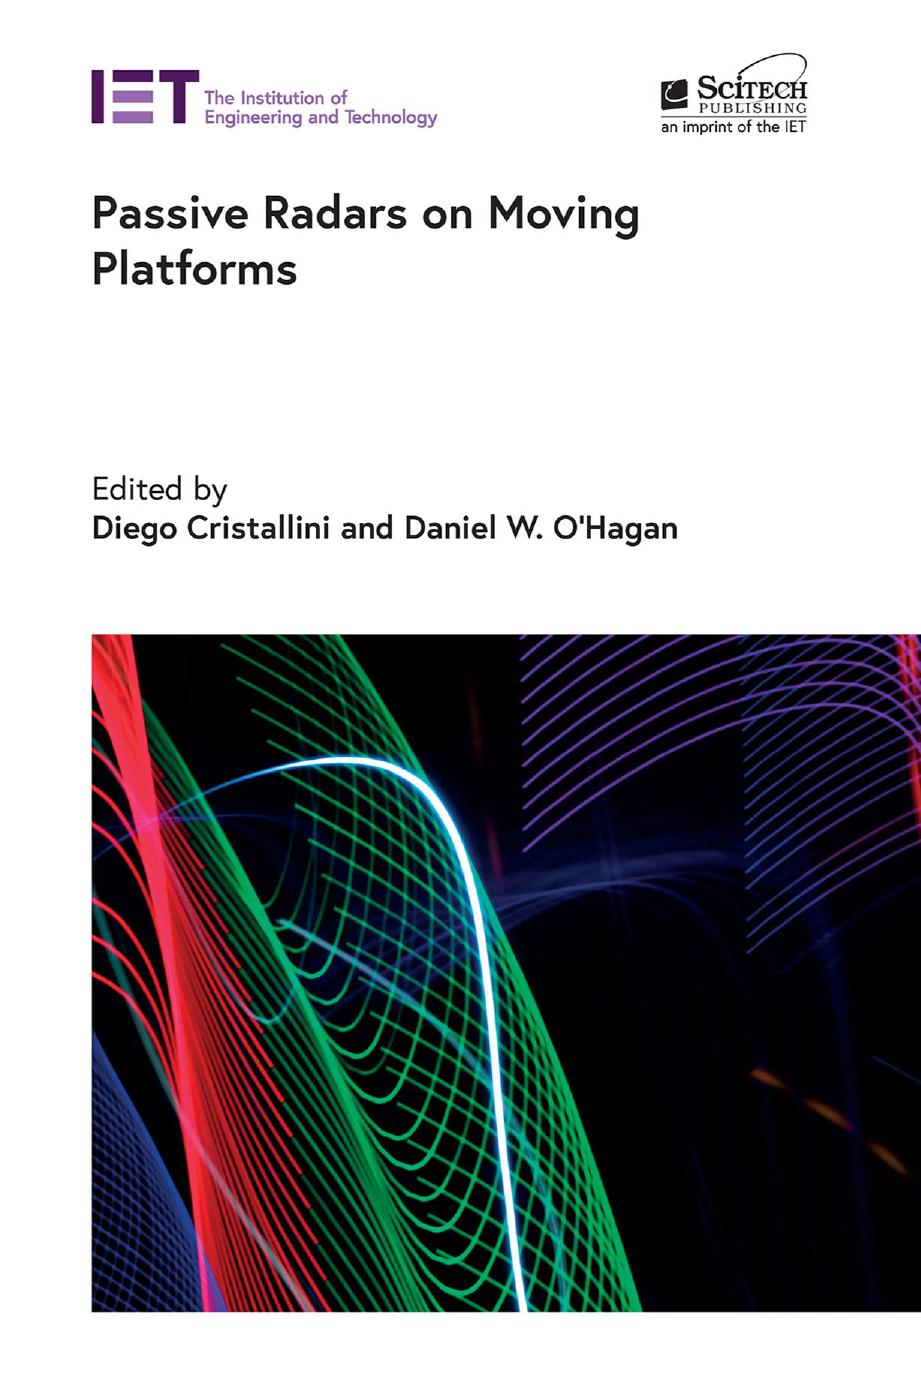 Passive Radars on Moving Platforms by Diego Cristallini Daniel W. O'Hagan